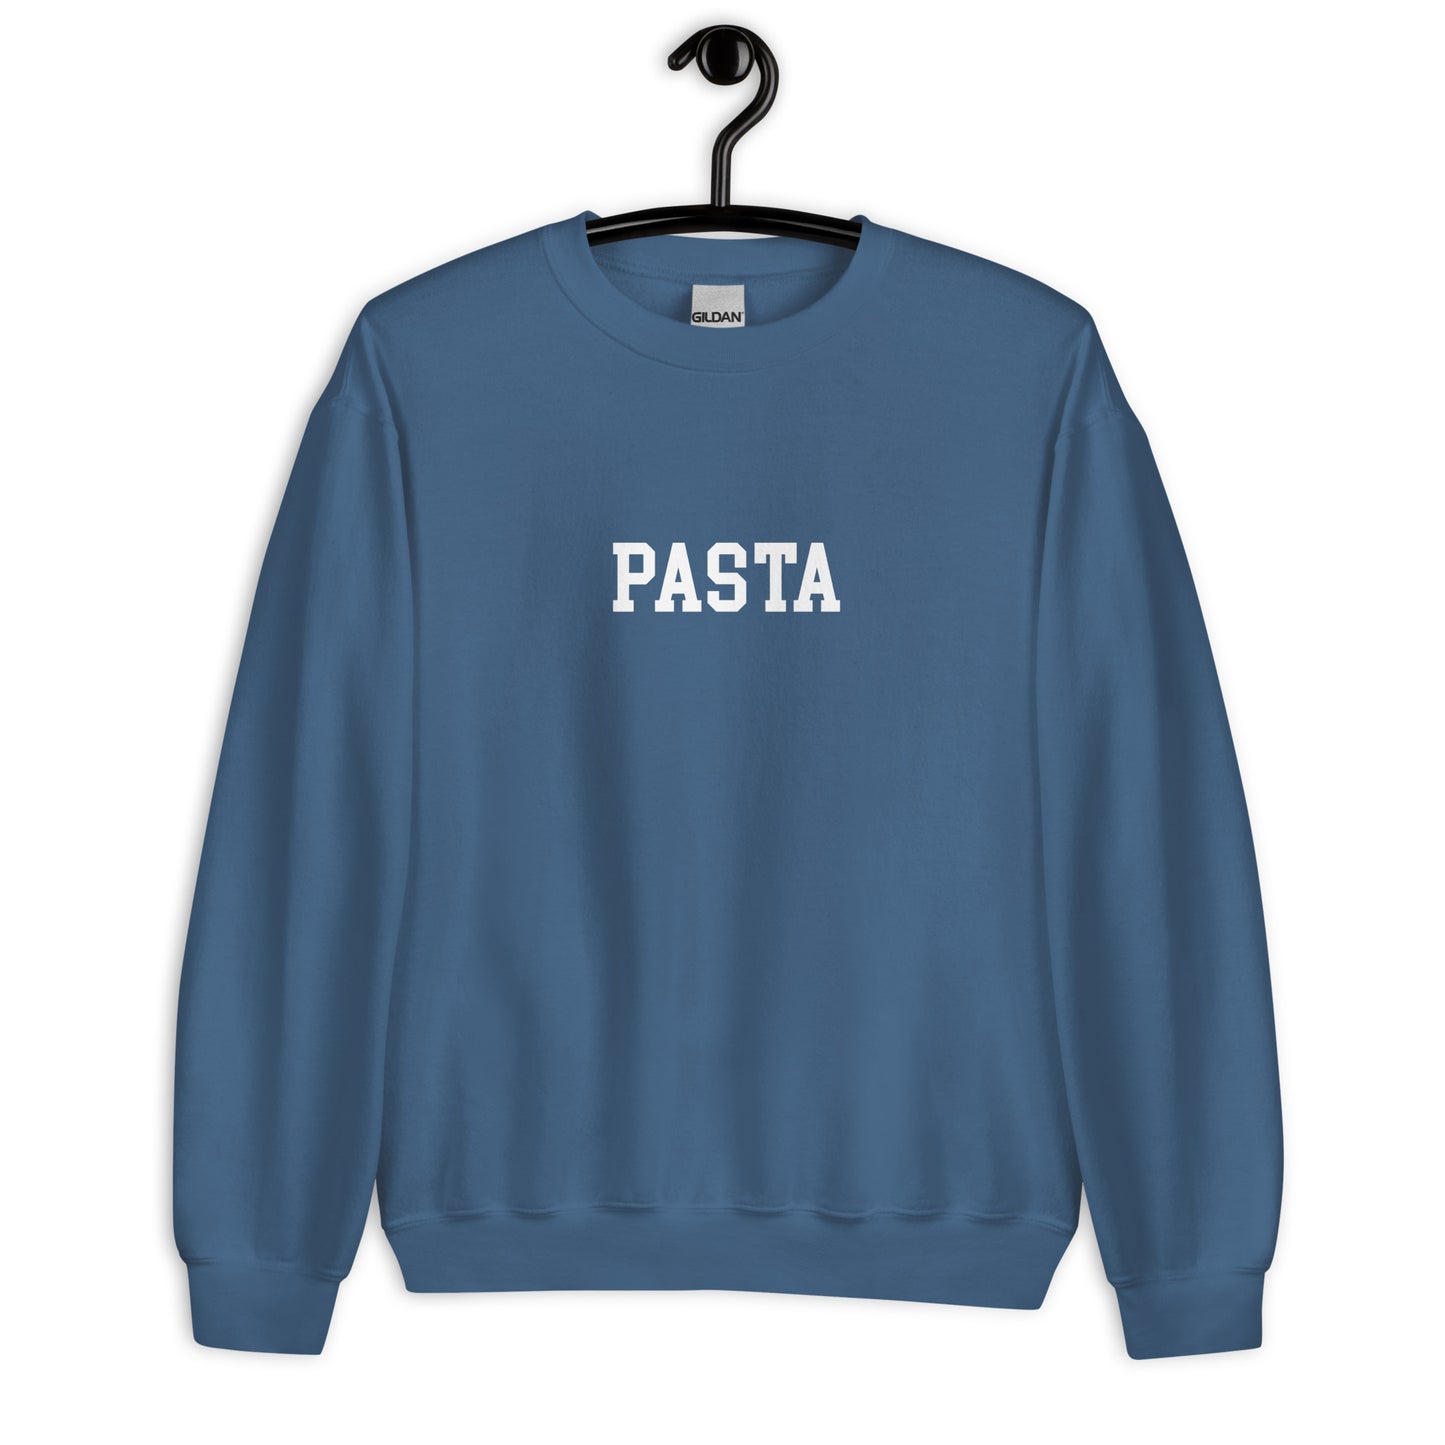 Pasta Sweatshirt - Arched Font